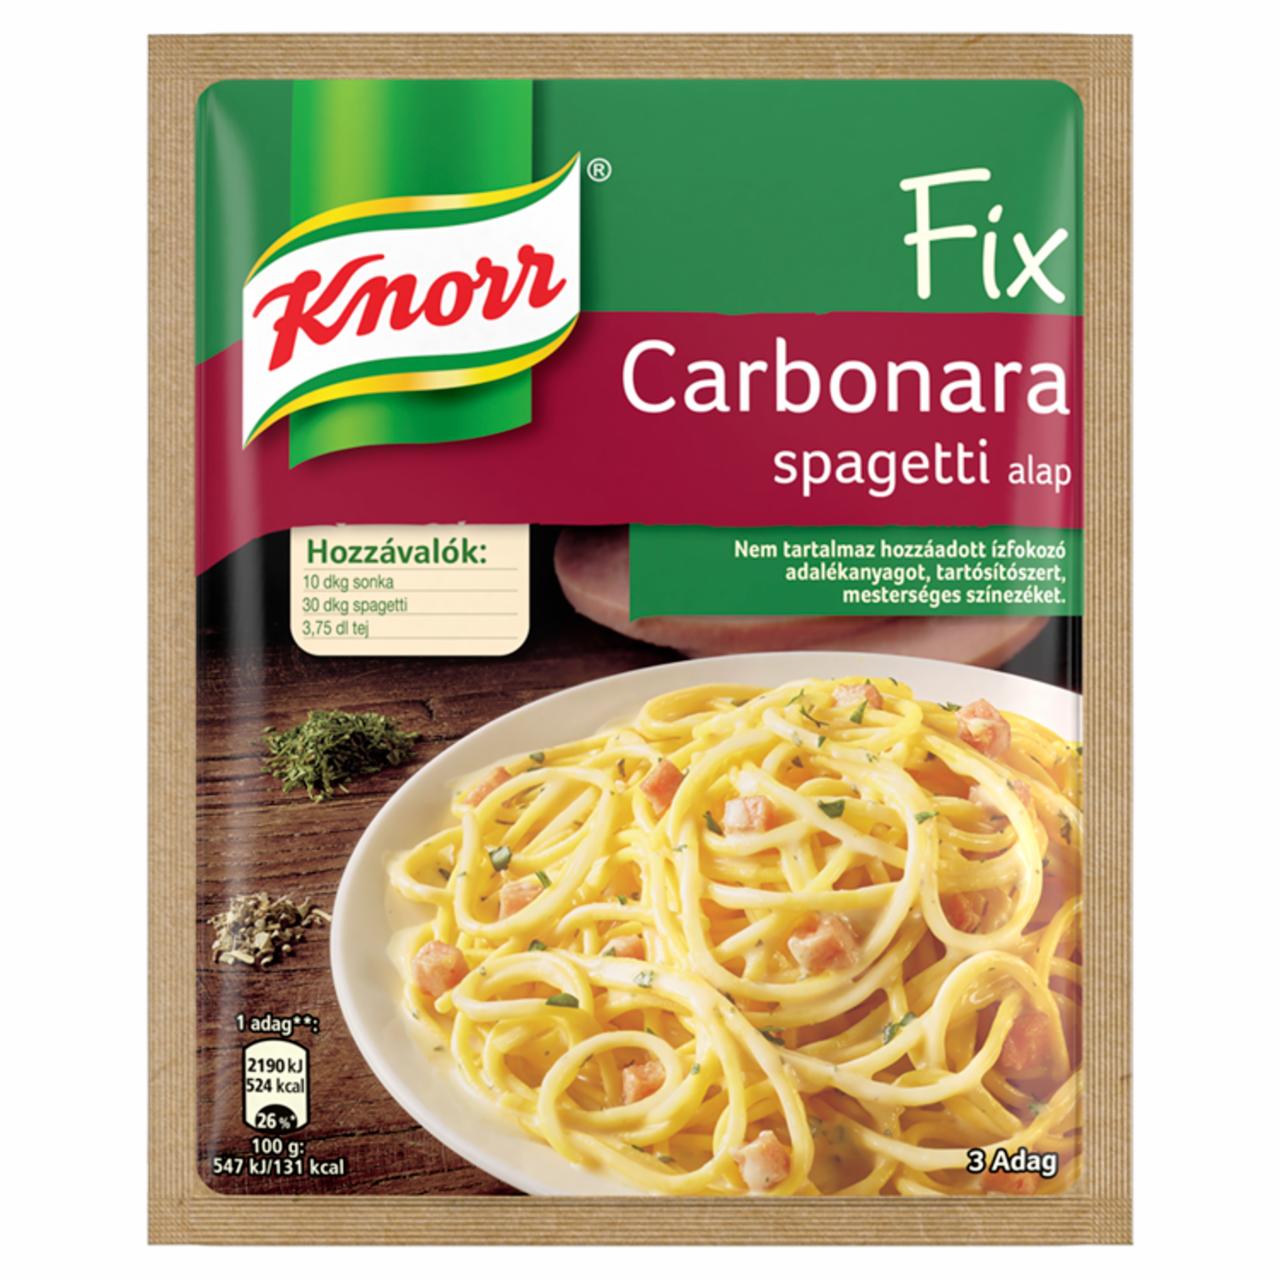 Képek - Knorr carbonara spagetti alap 36 g